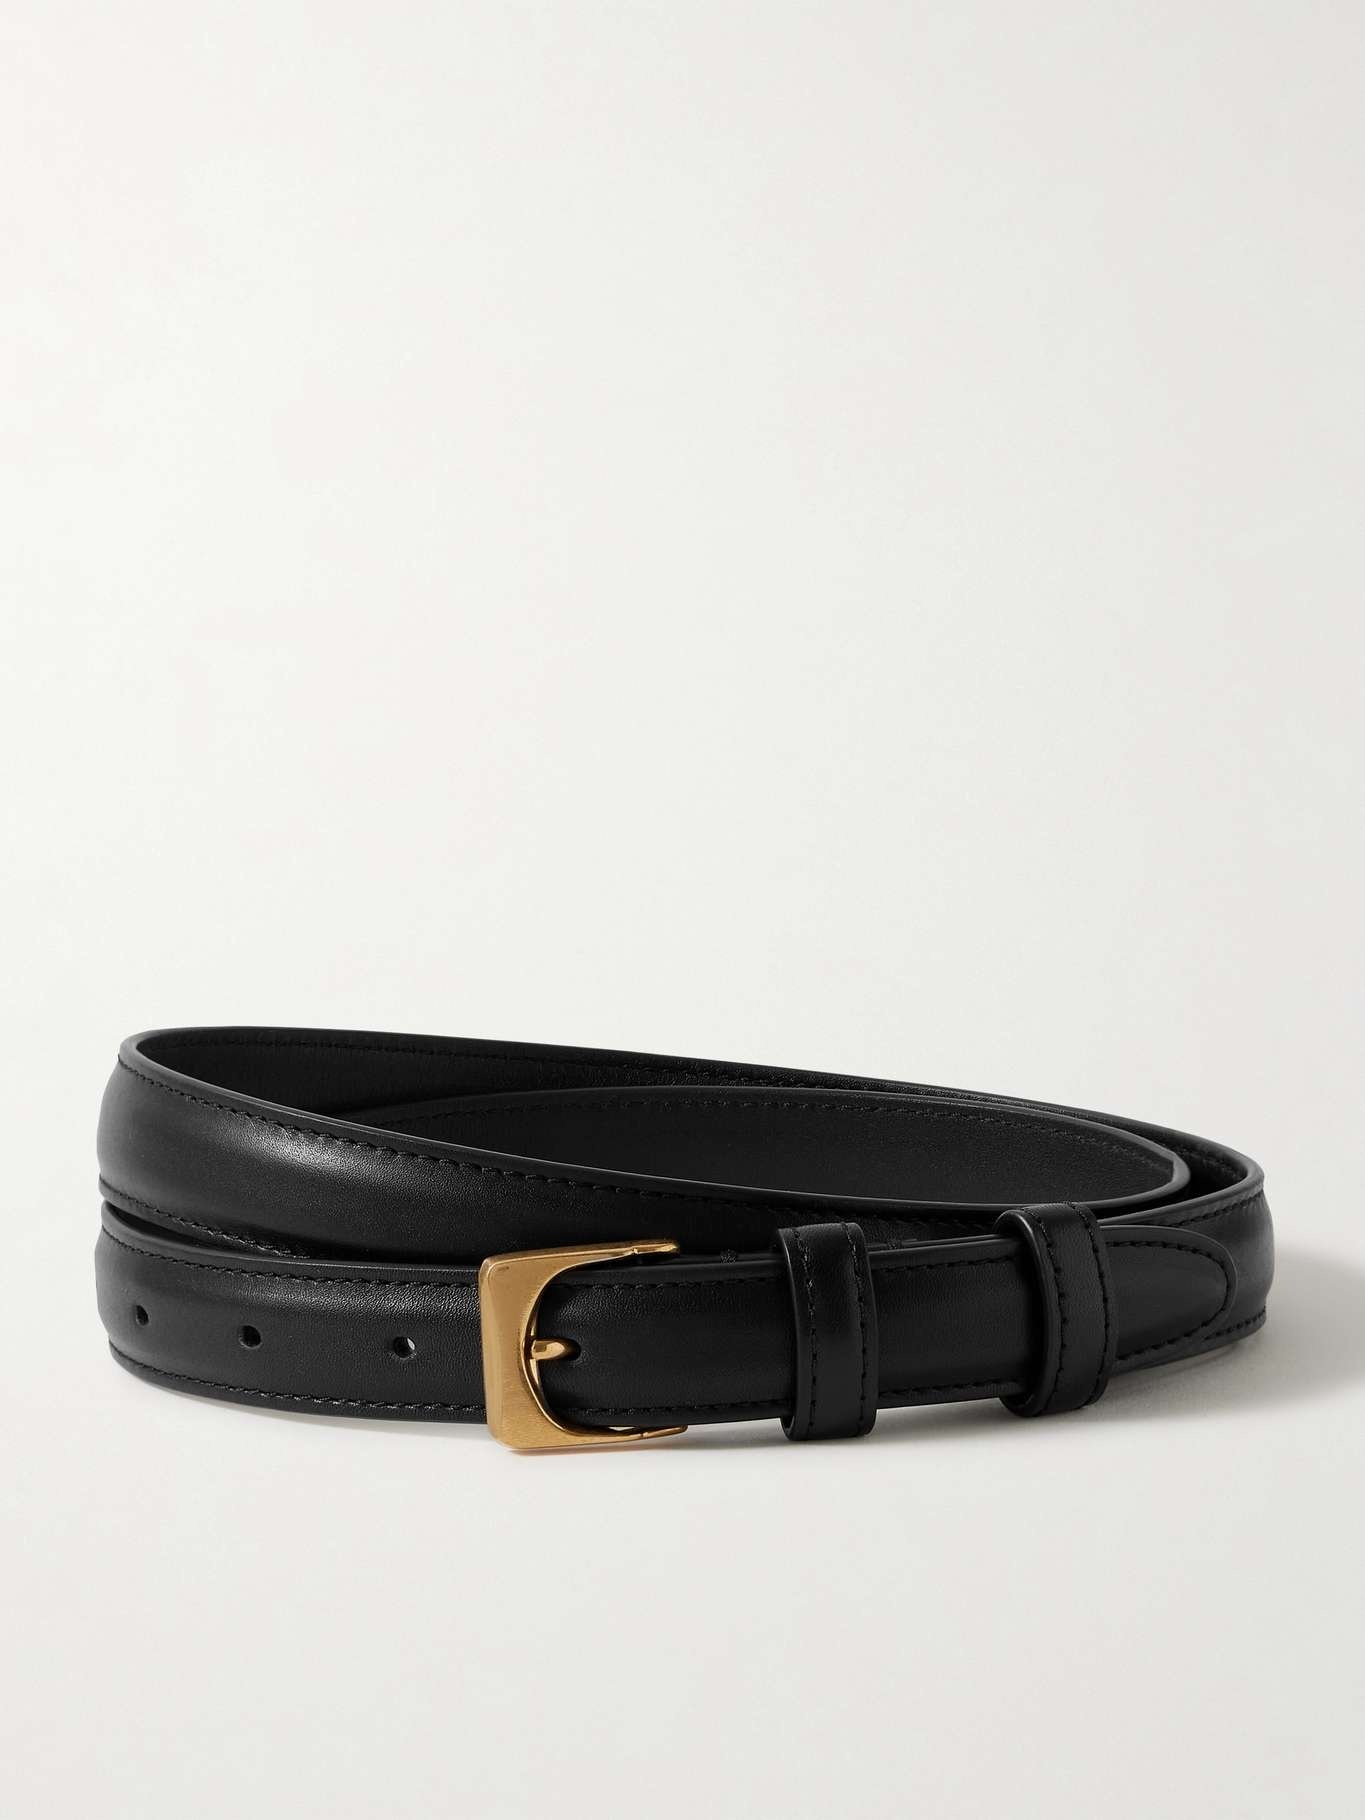 Moon leather belt - 1